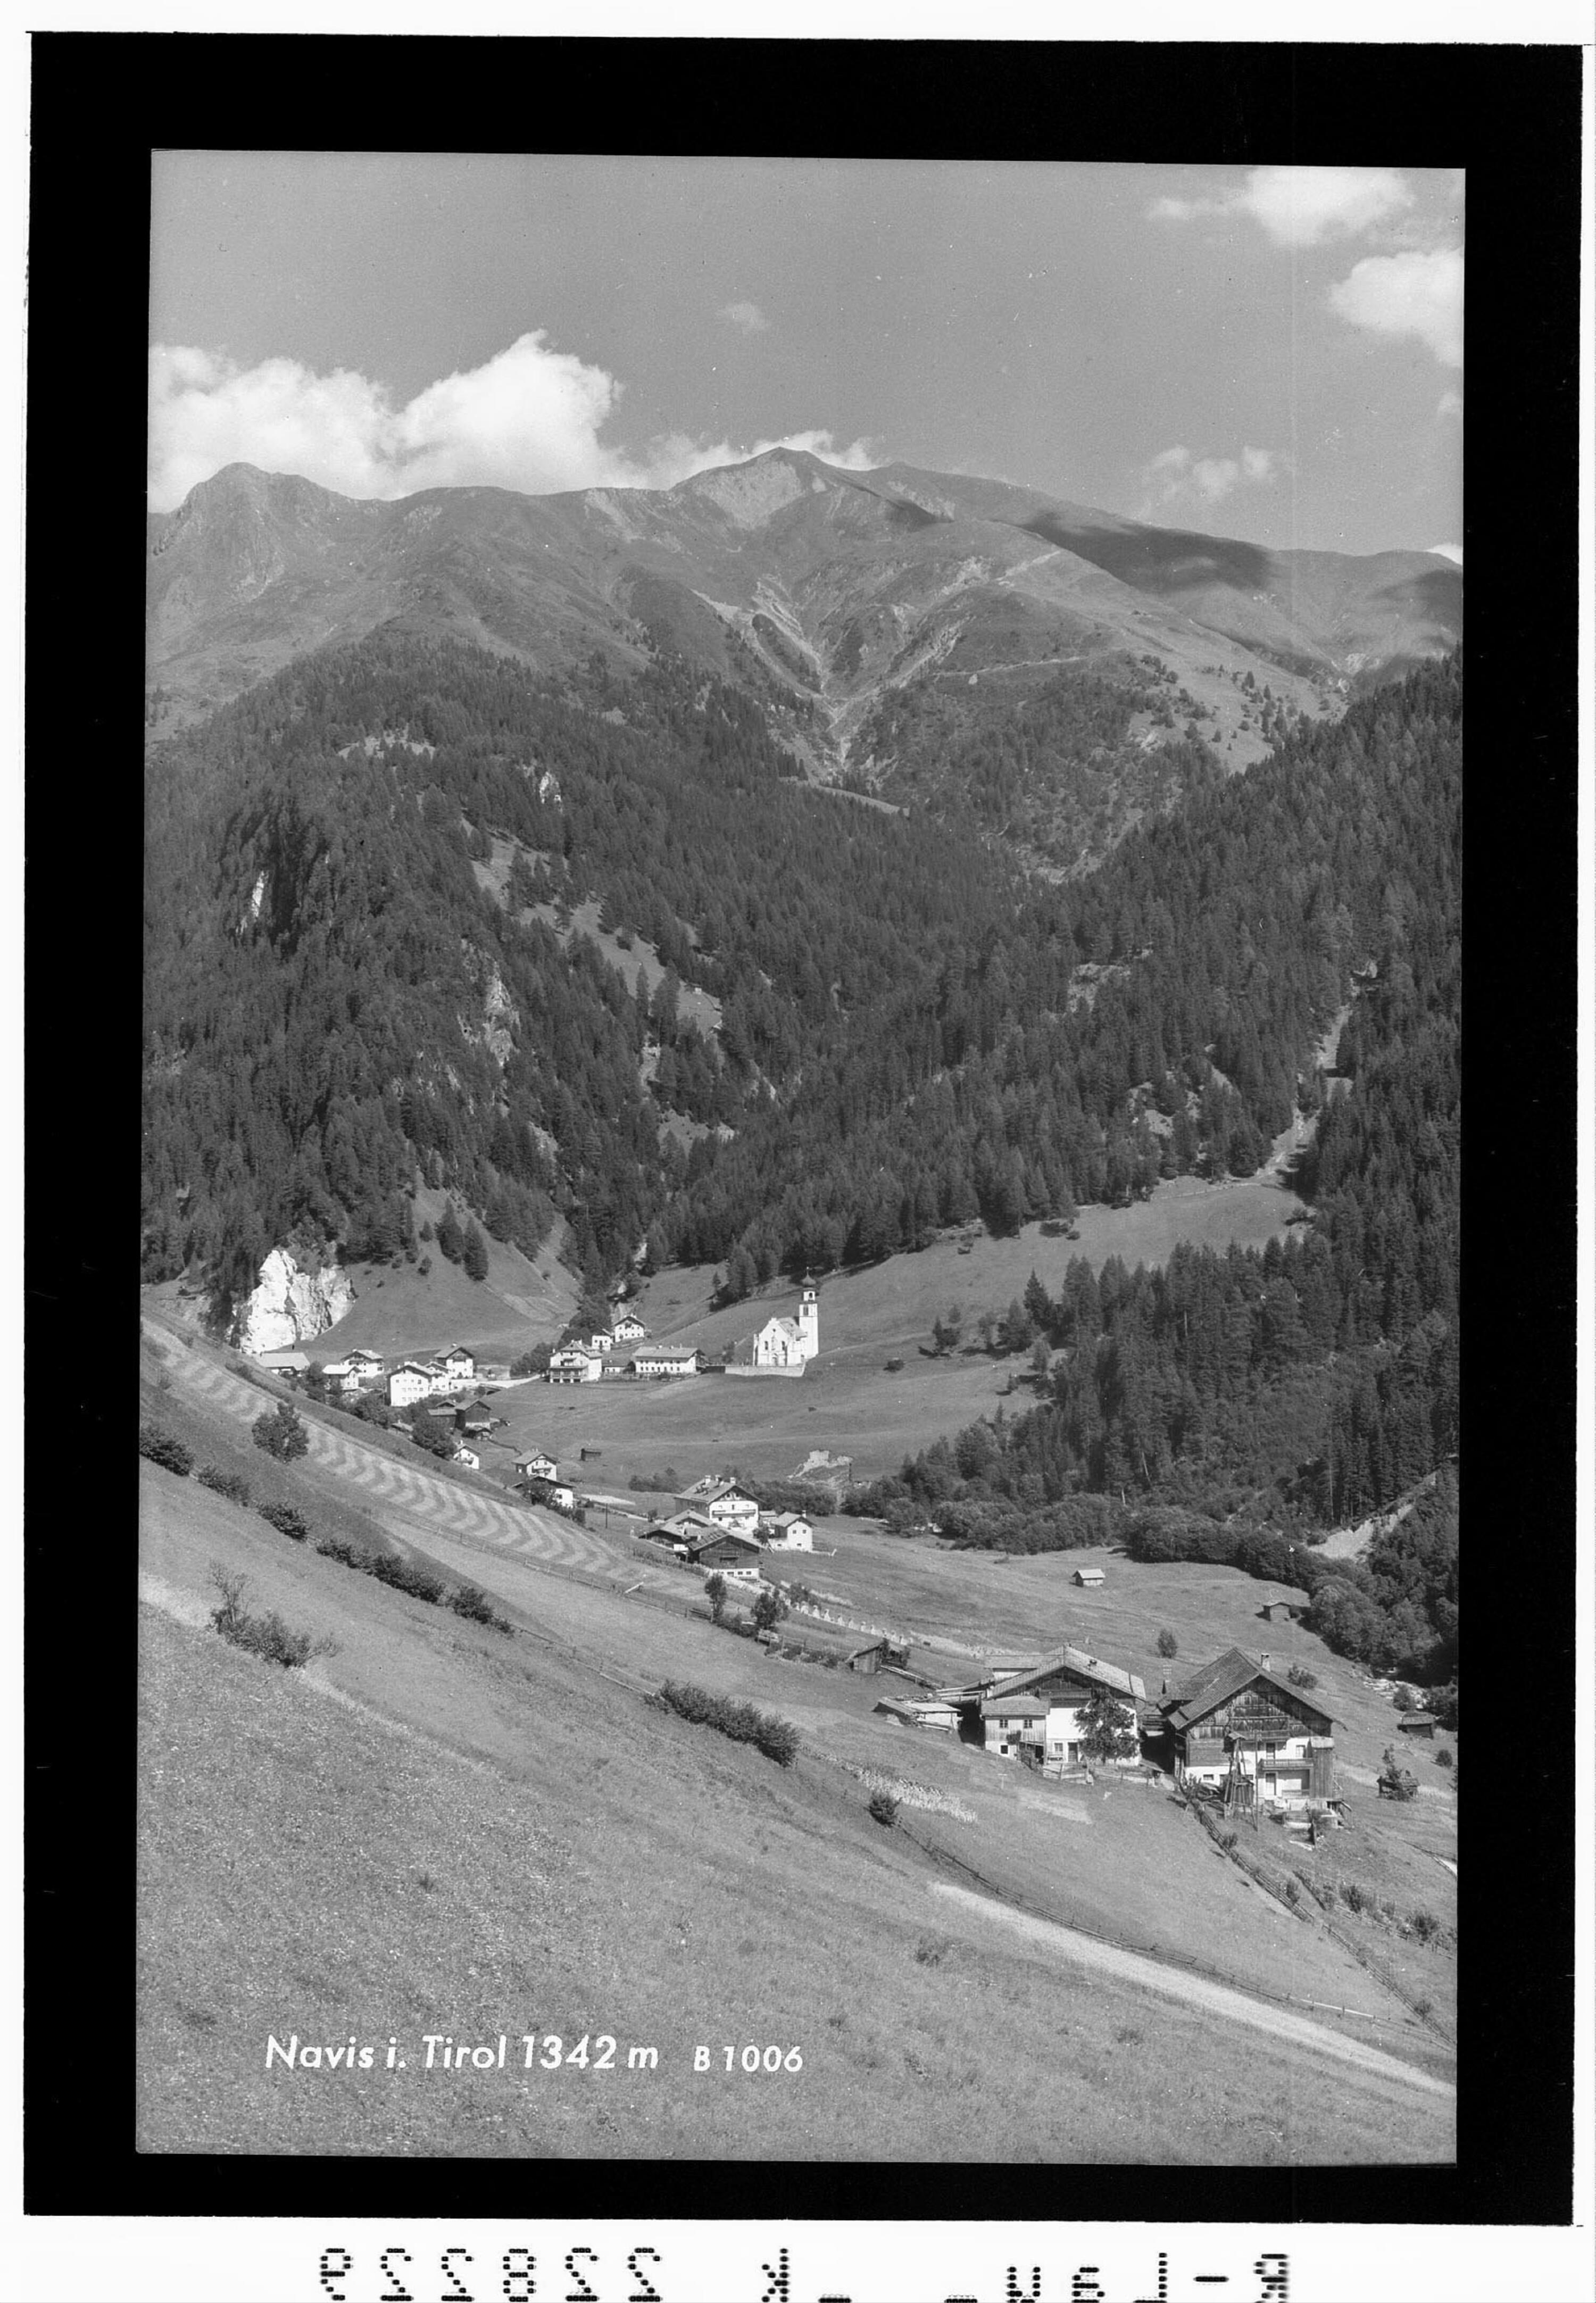 Navis in Tirol 1342 m></div>


    <hr>
    <div class=